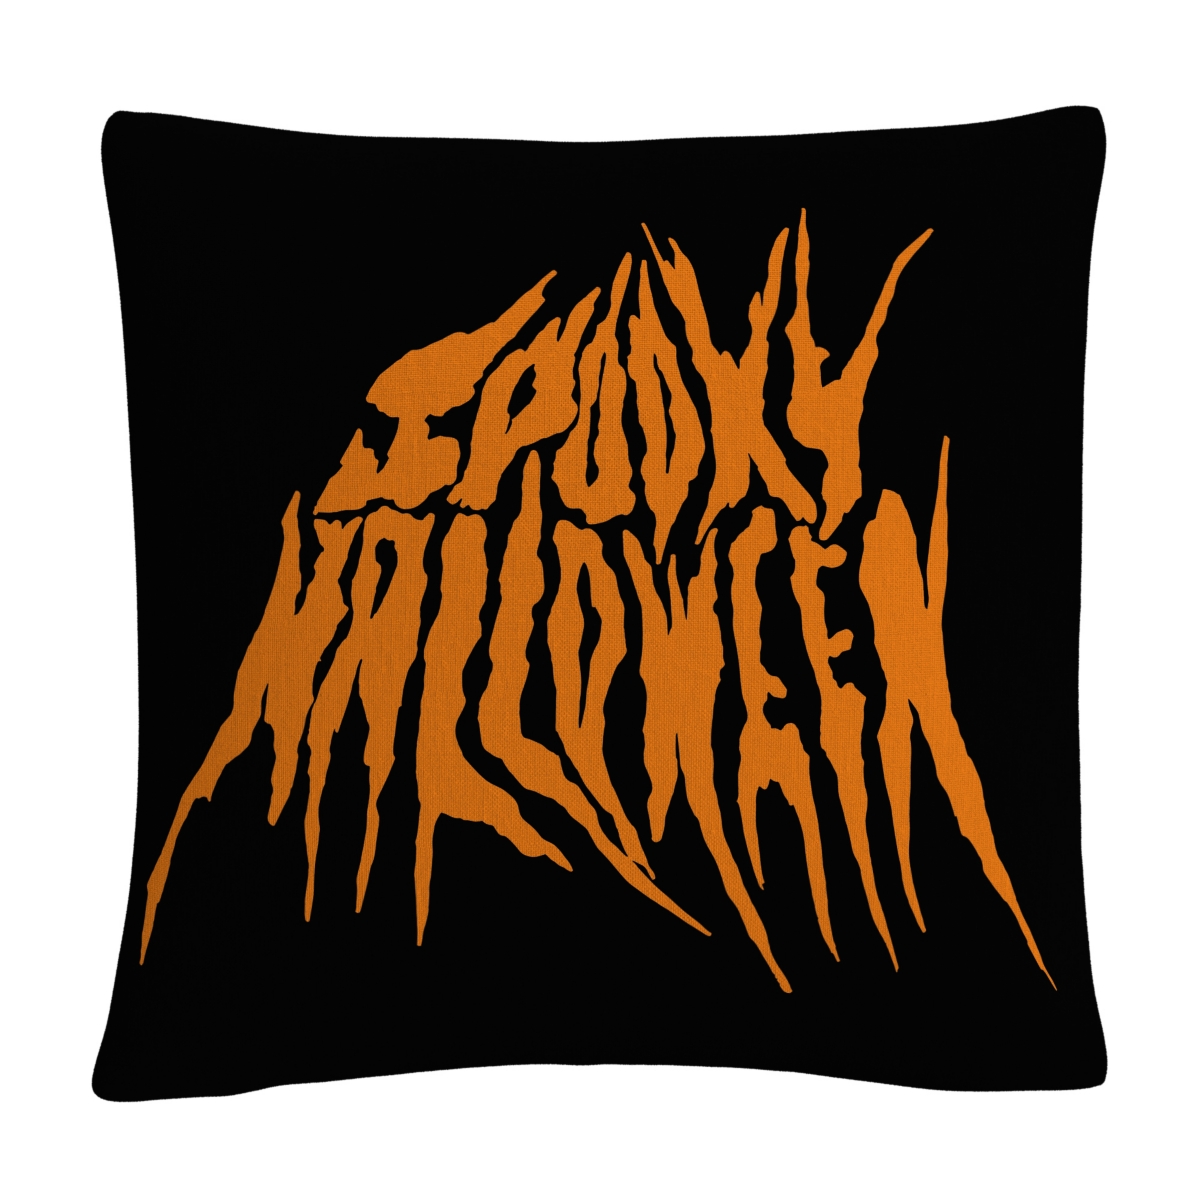 Abc Spooky Metal Halloween Decorative Pillow, 16 x 16